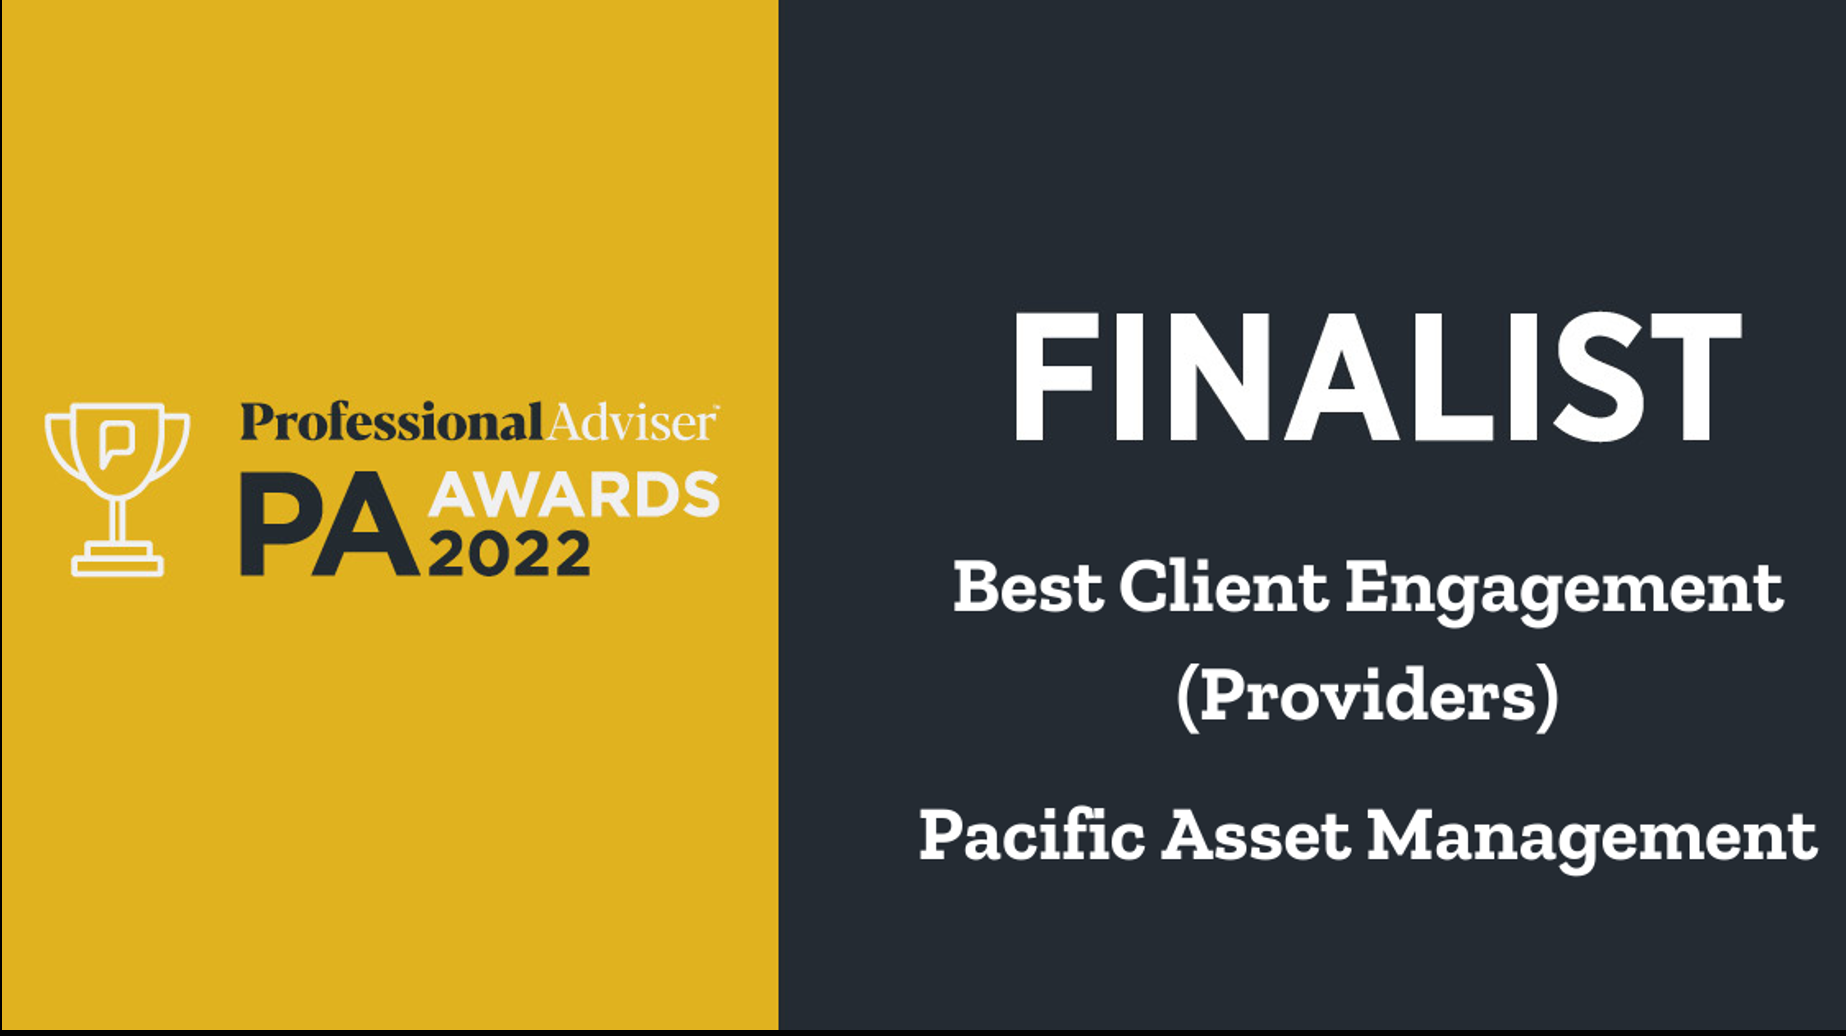 Professional Adviser Awards: 2022 Finalist - Pacific Asset Management